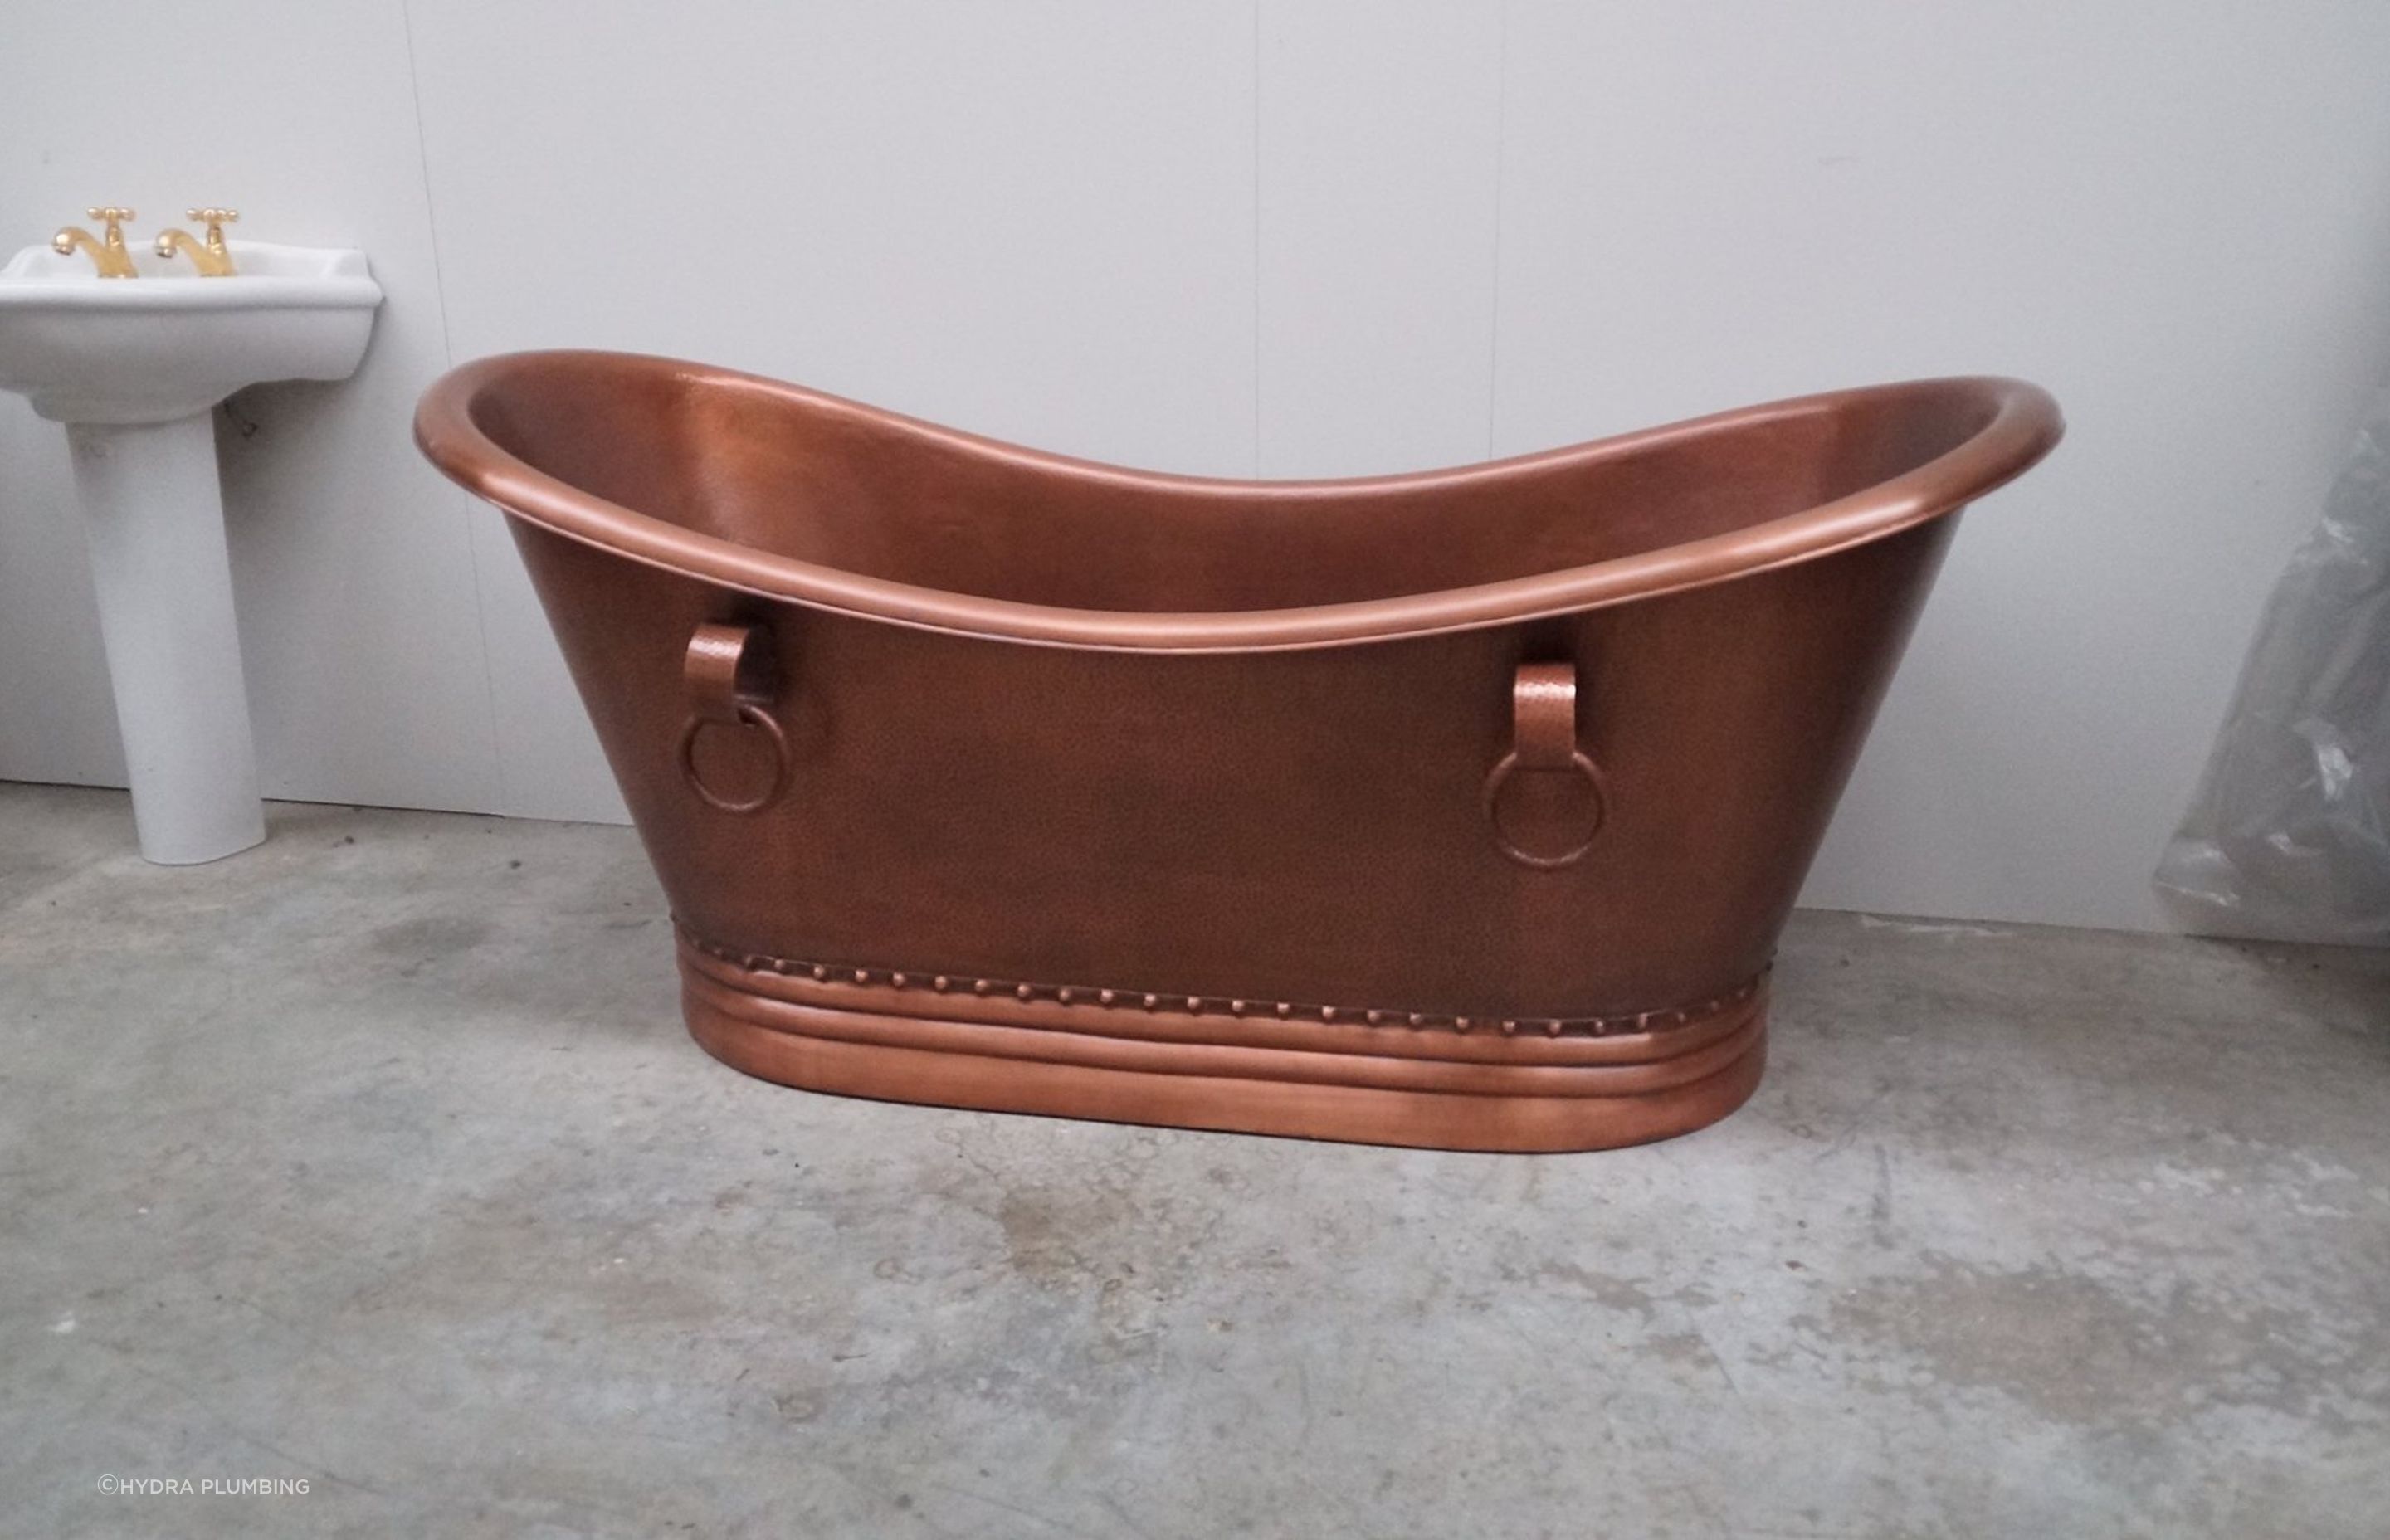 This hammered copper bathtub has unique rustic charm.